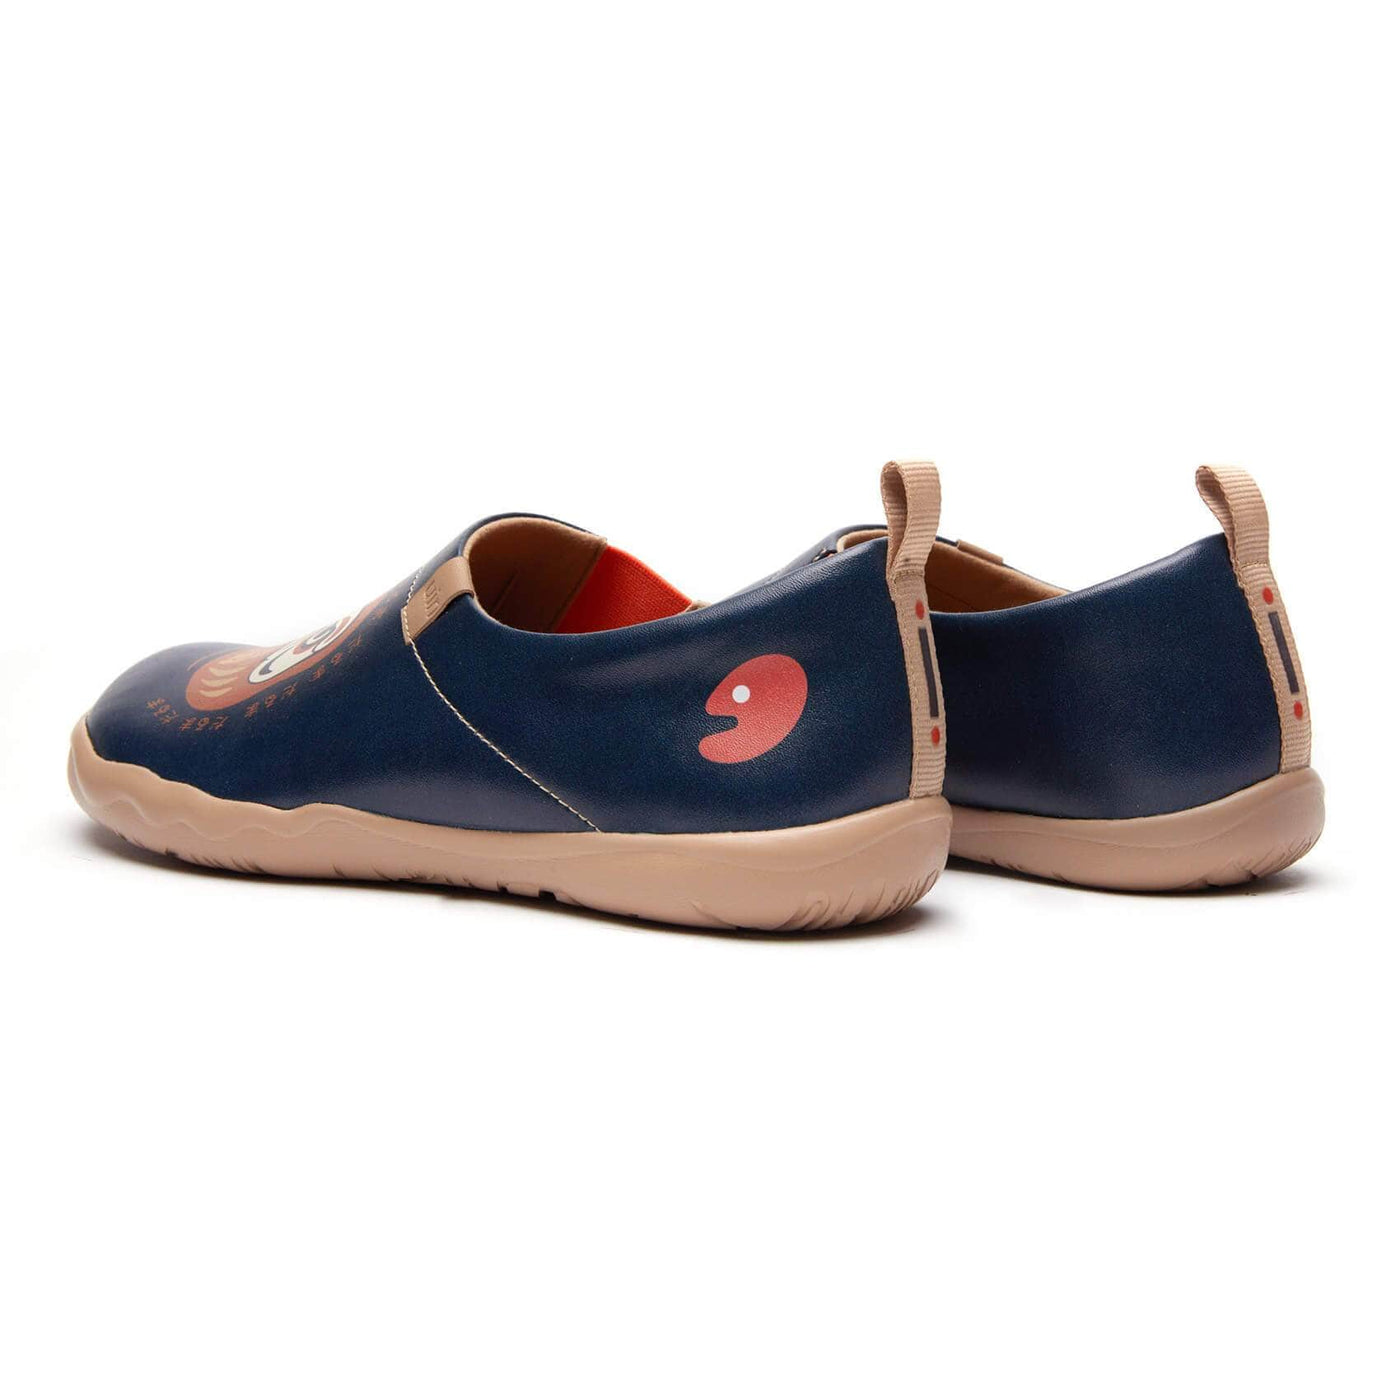 UIN Footwear Men Daruma-Deep Blue Canvas loafers